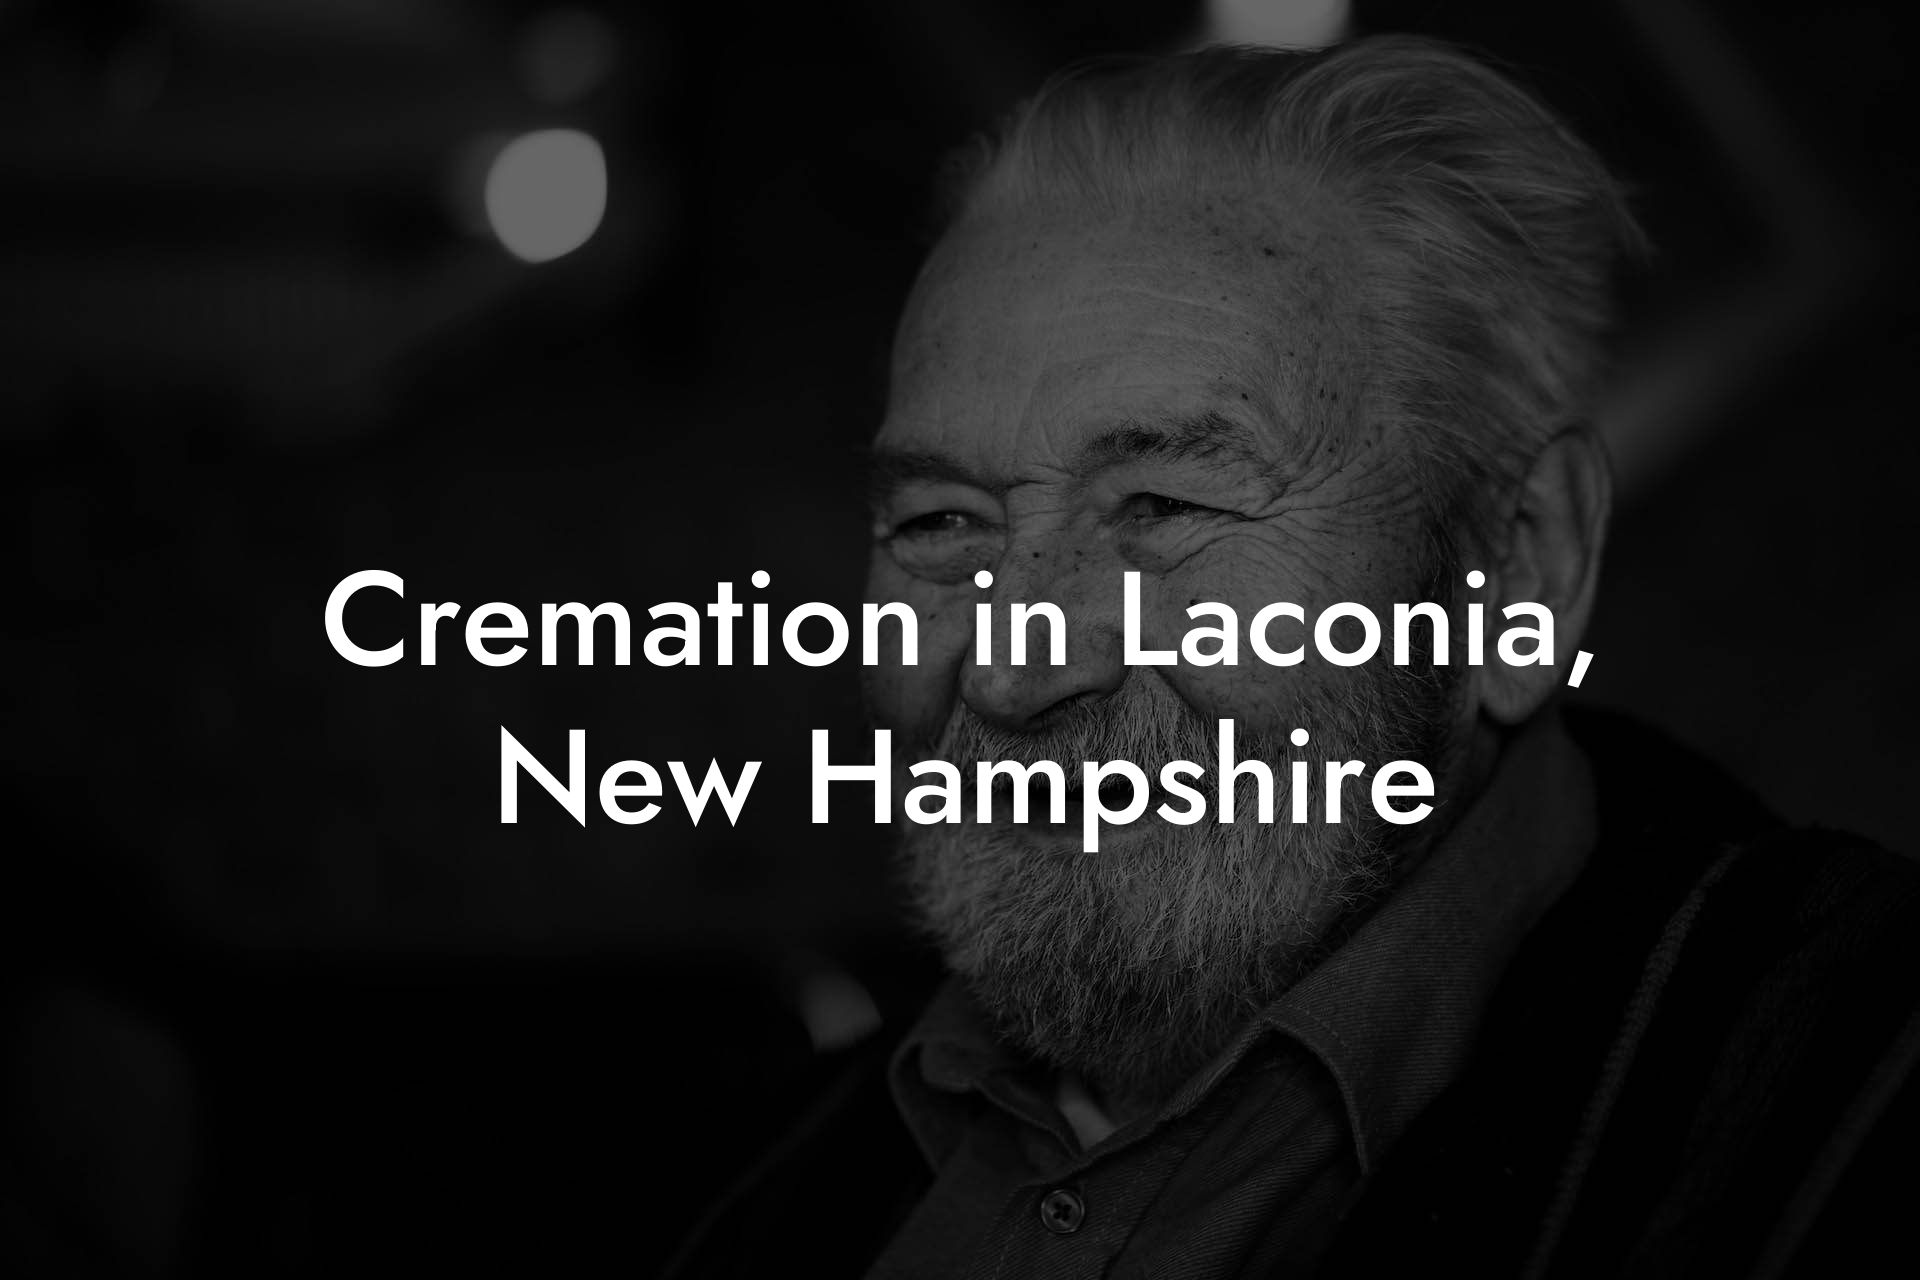 Cremation in Laconia, New Hampshire